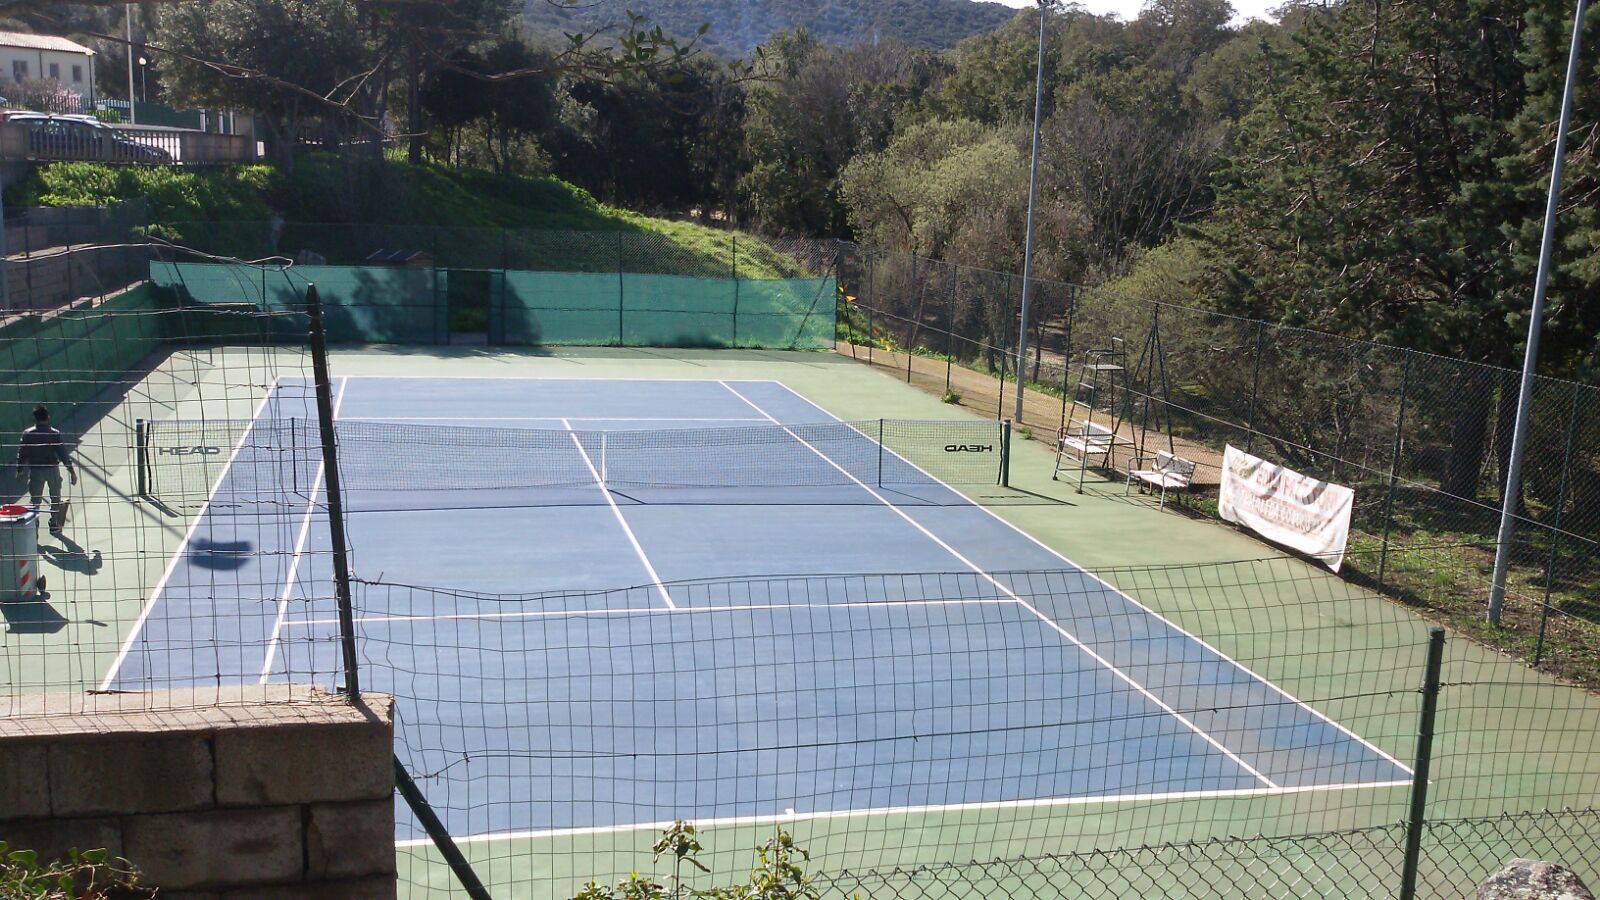 Tennis Club Luogosanto